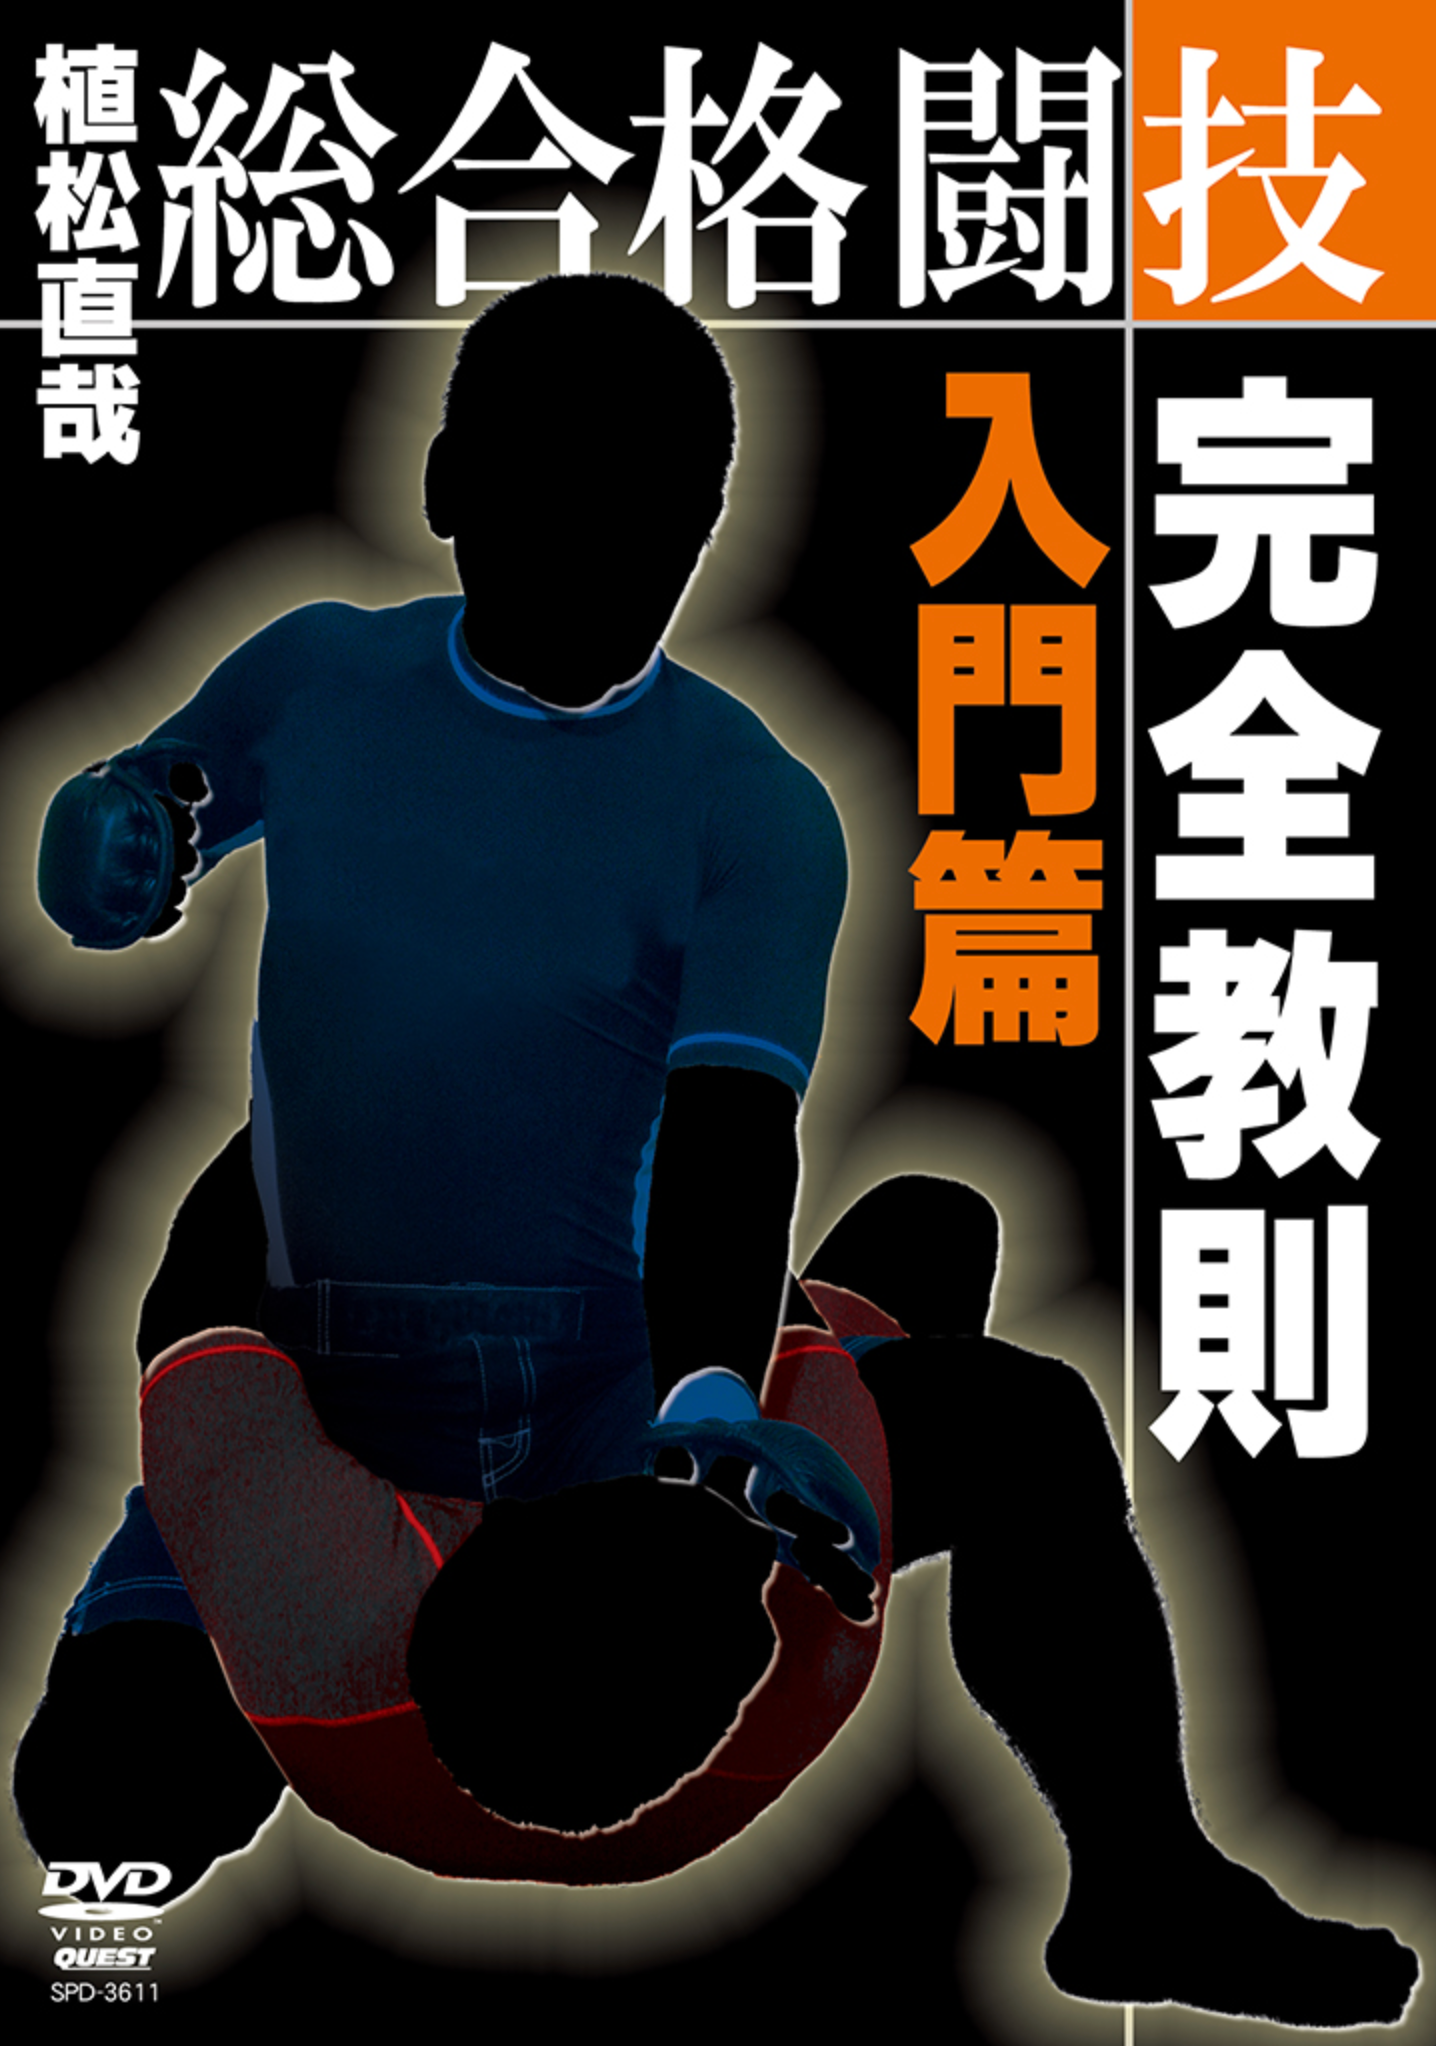 Complete Introduction to MMA DVD by Naoya Uematsu - Budovideos Inc